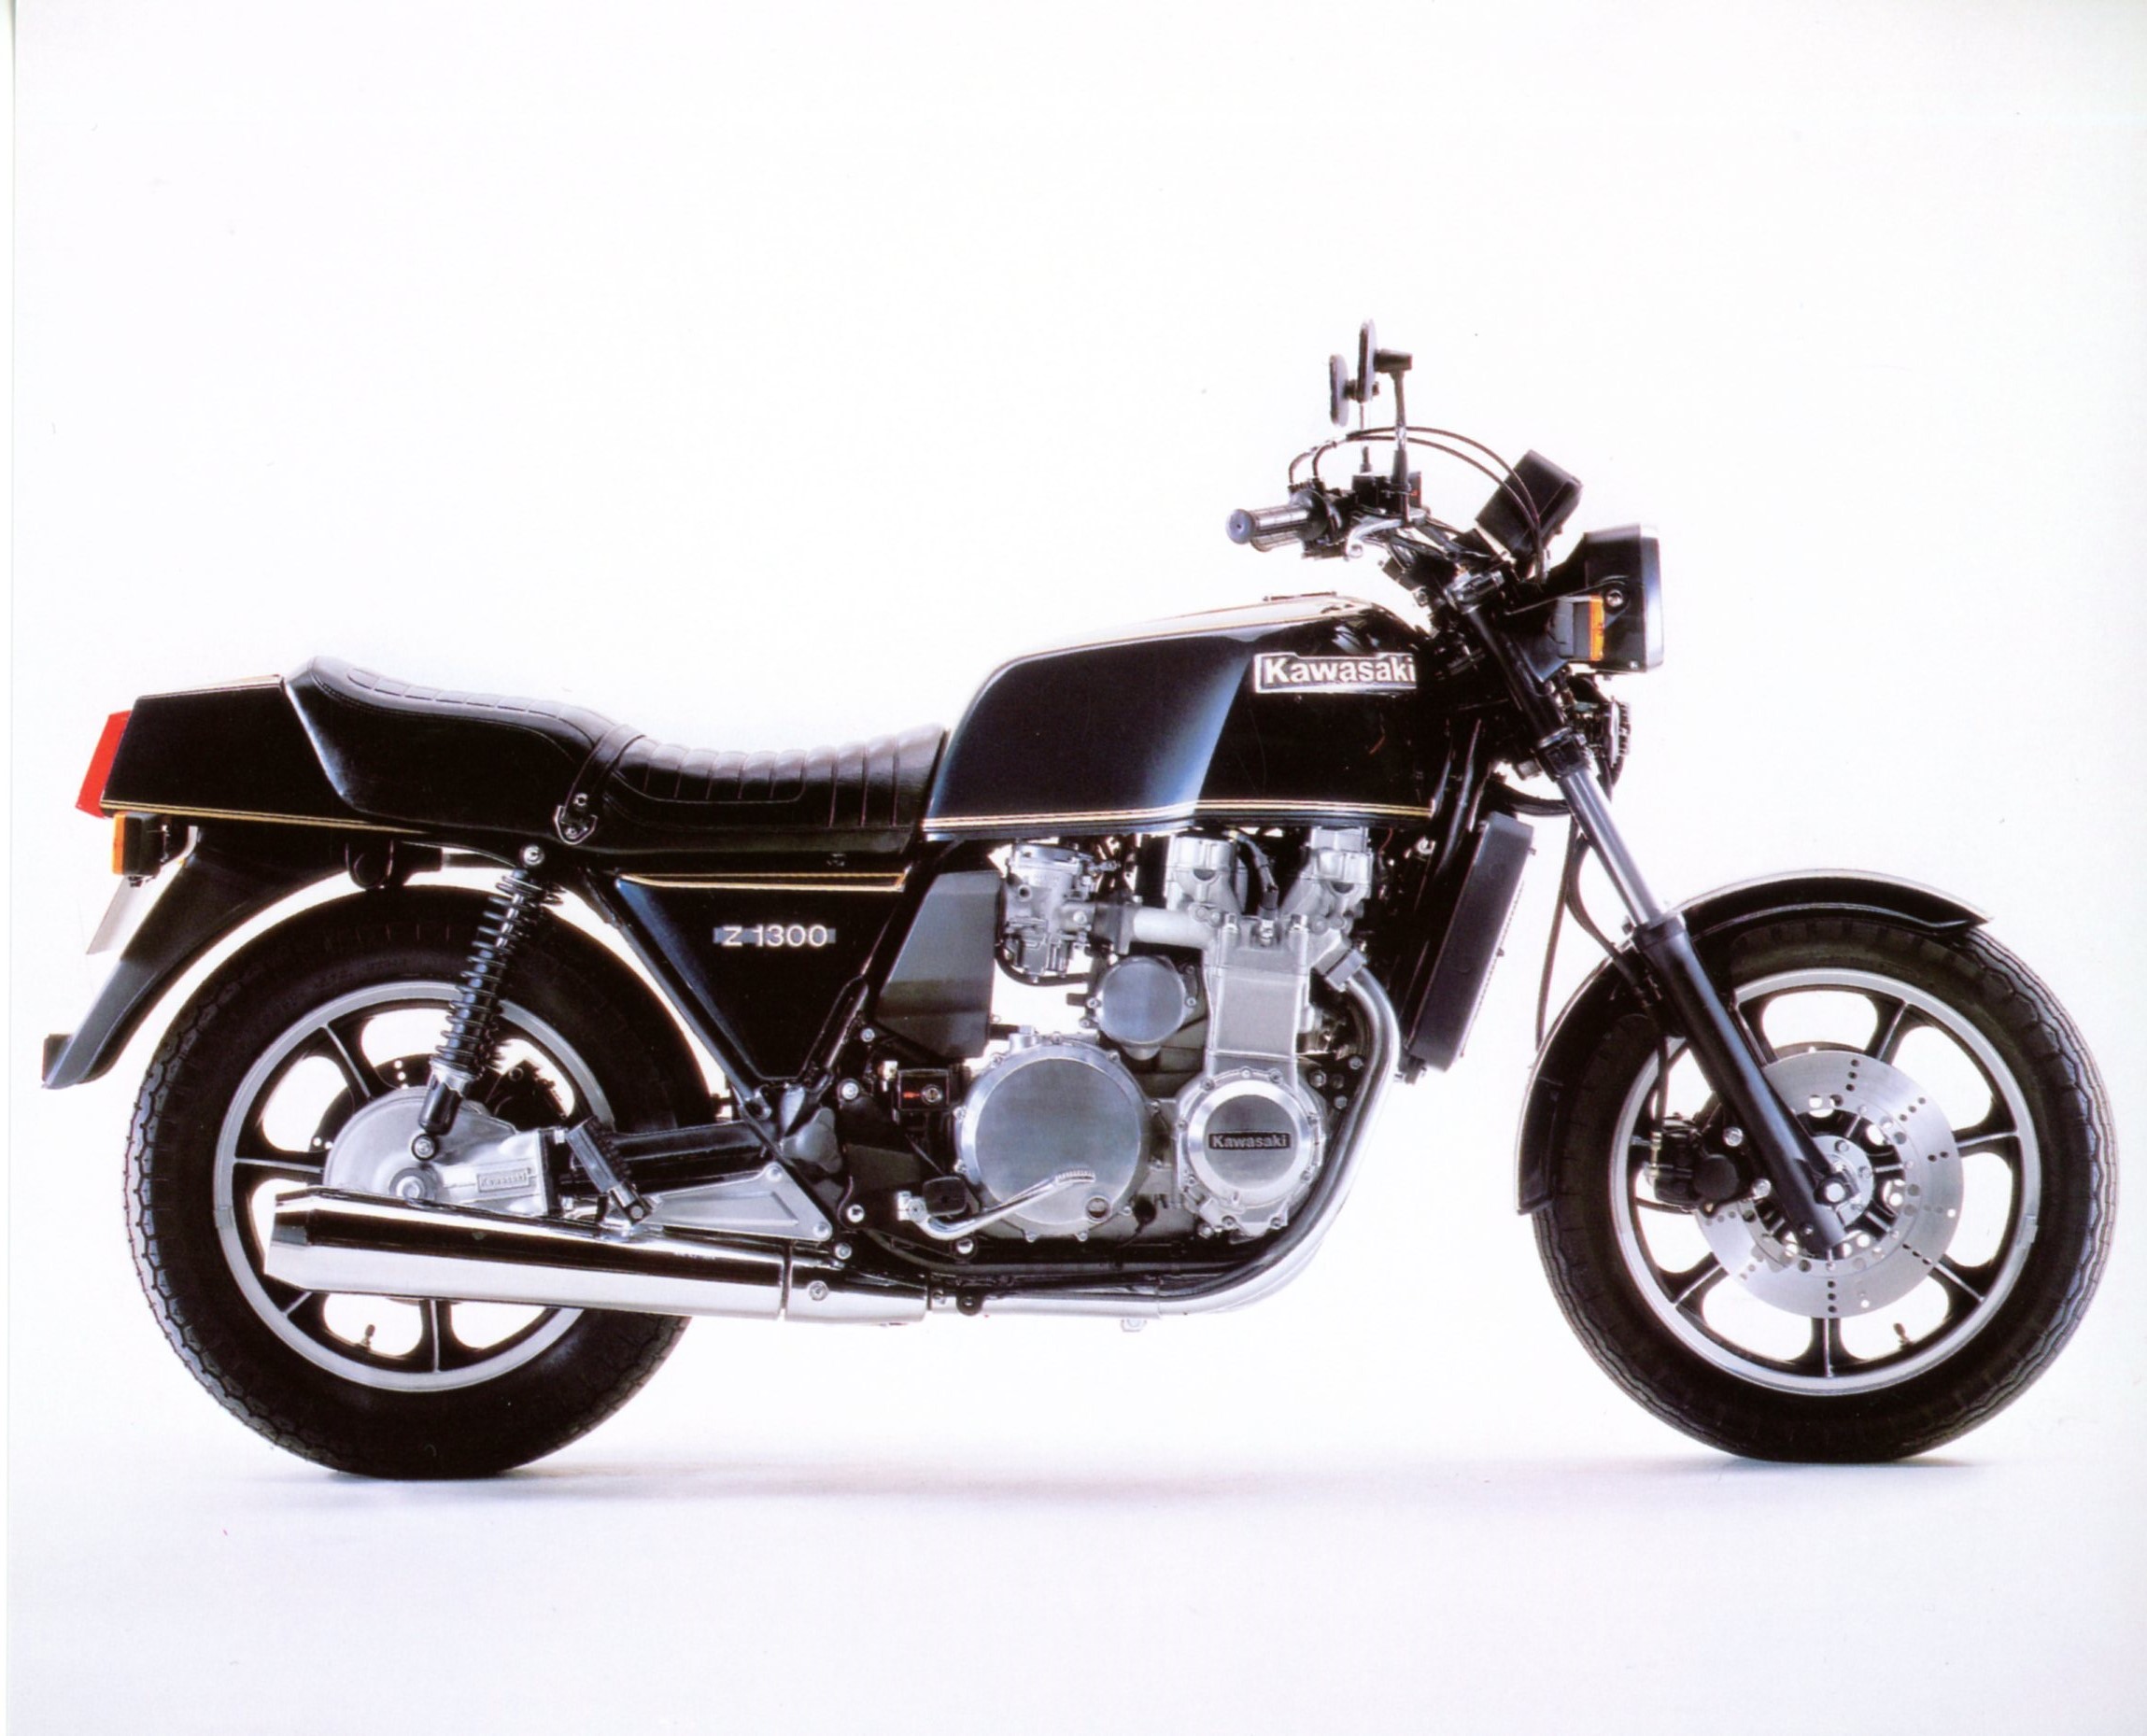 KAWASAKI Z1300 1979 - FICHE MOTO CARACTÉRISTIQUES